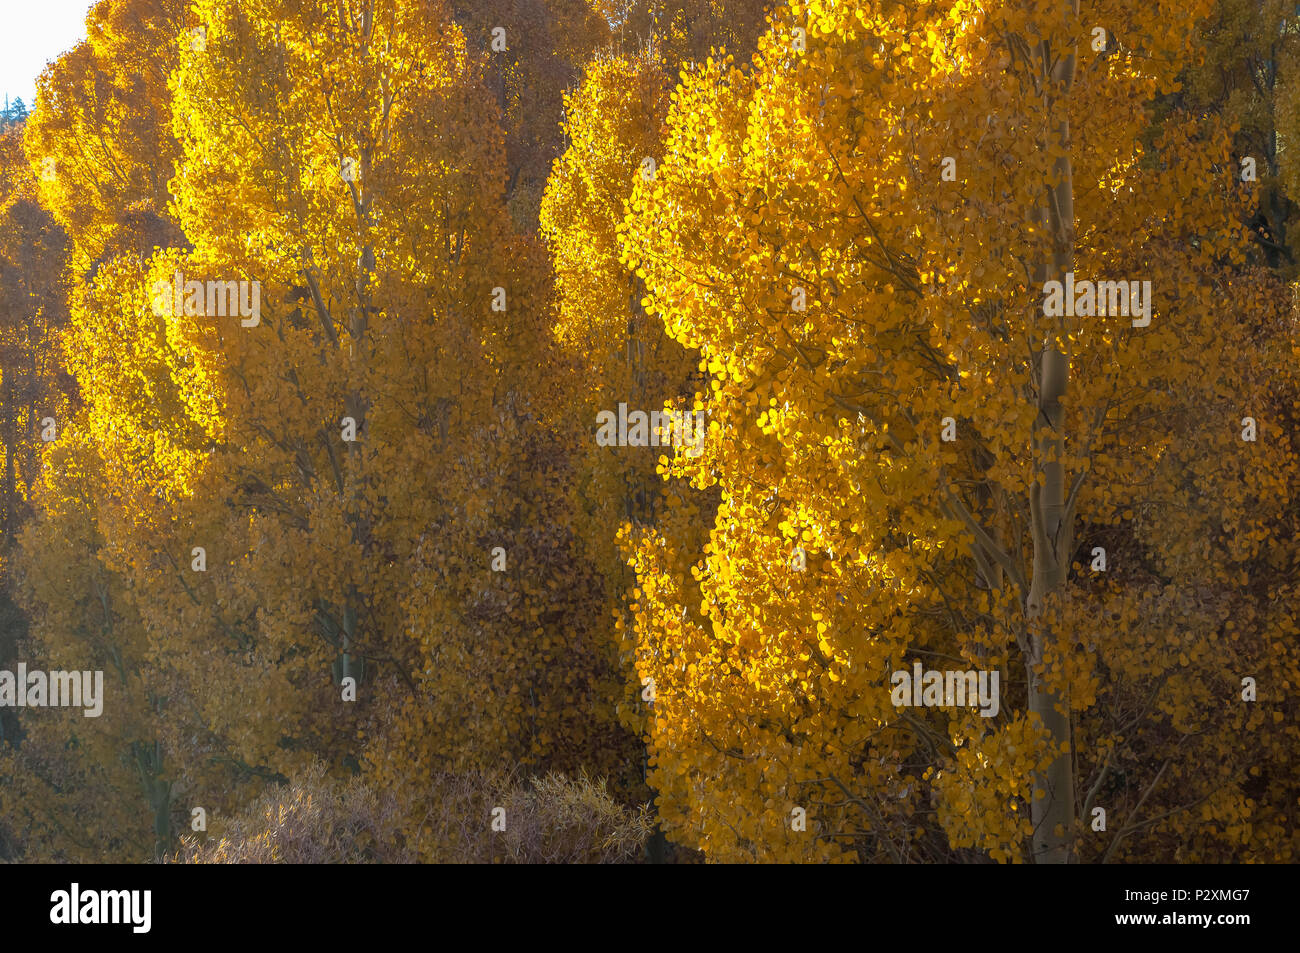 Mountain aspens (Populus tremuloides) in their fall foliage, Inyo National Forest, Eastern Sierra Nevada Mountains, California, United States. Stock Photo